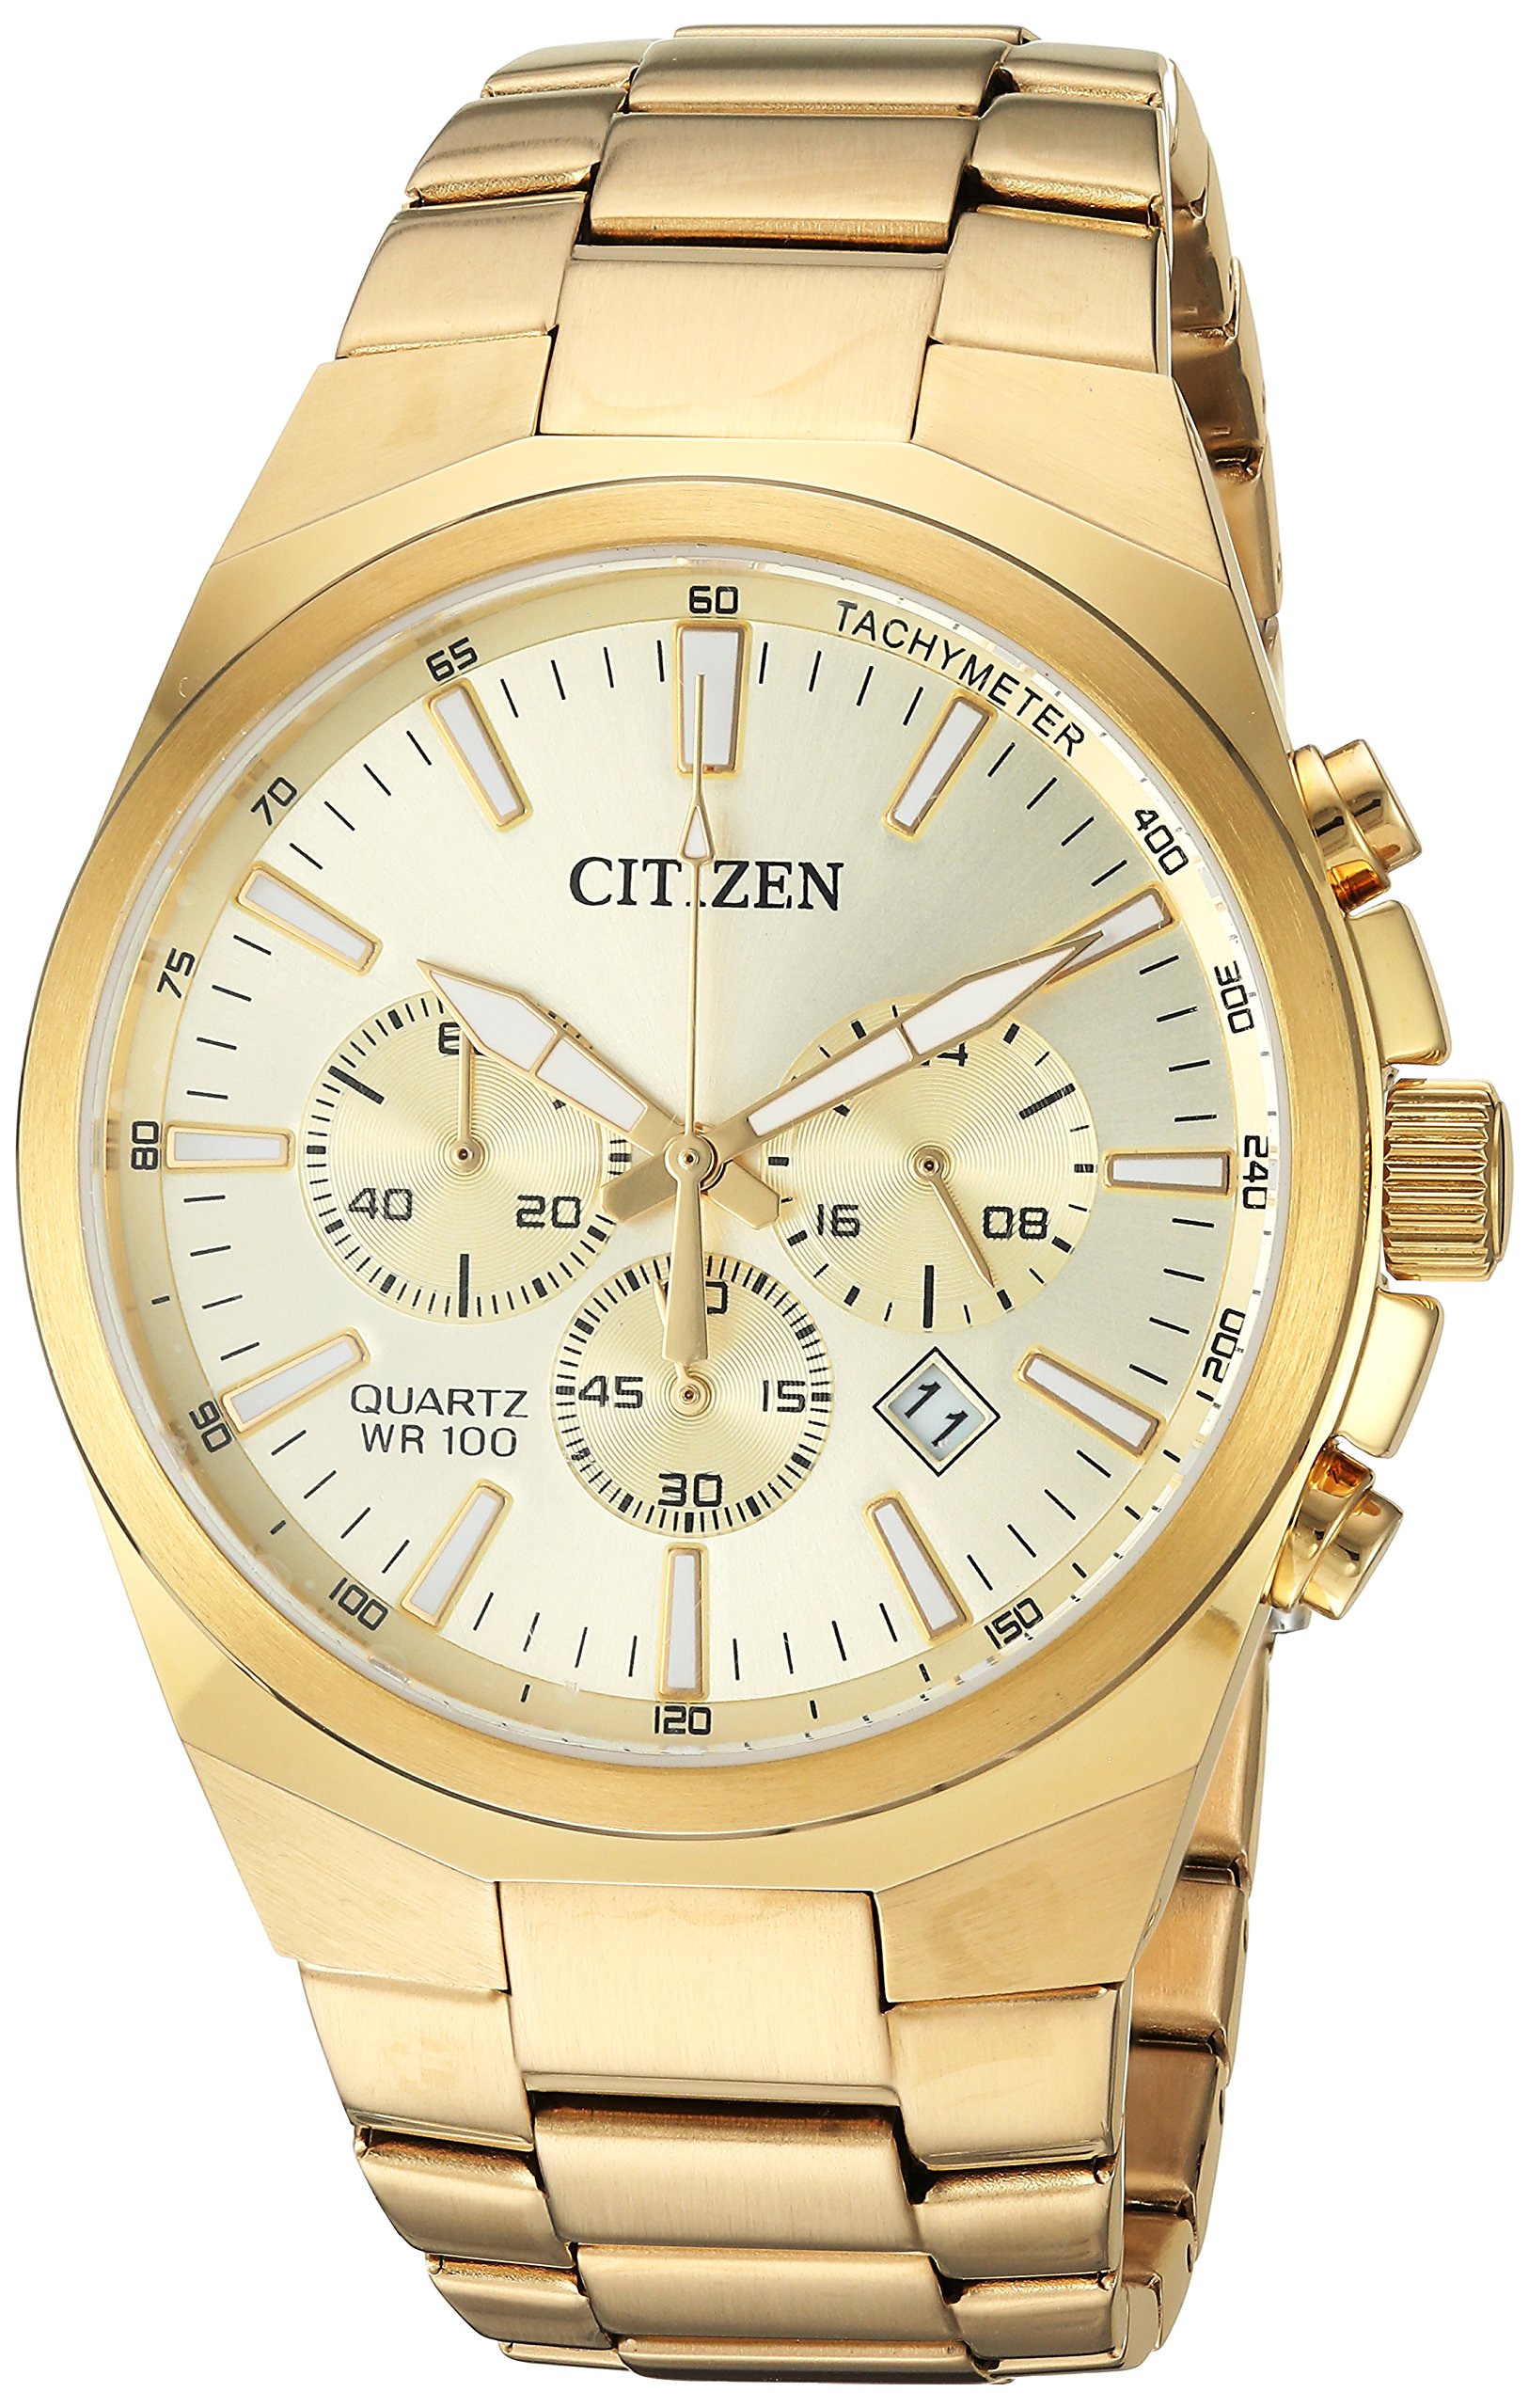 Citizen Men's Classic Chronograph Quartz Watch, Stainless Steel